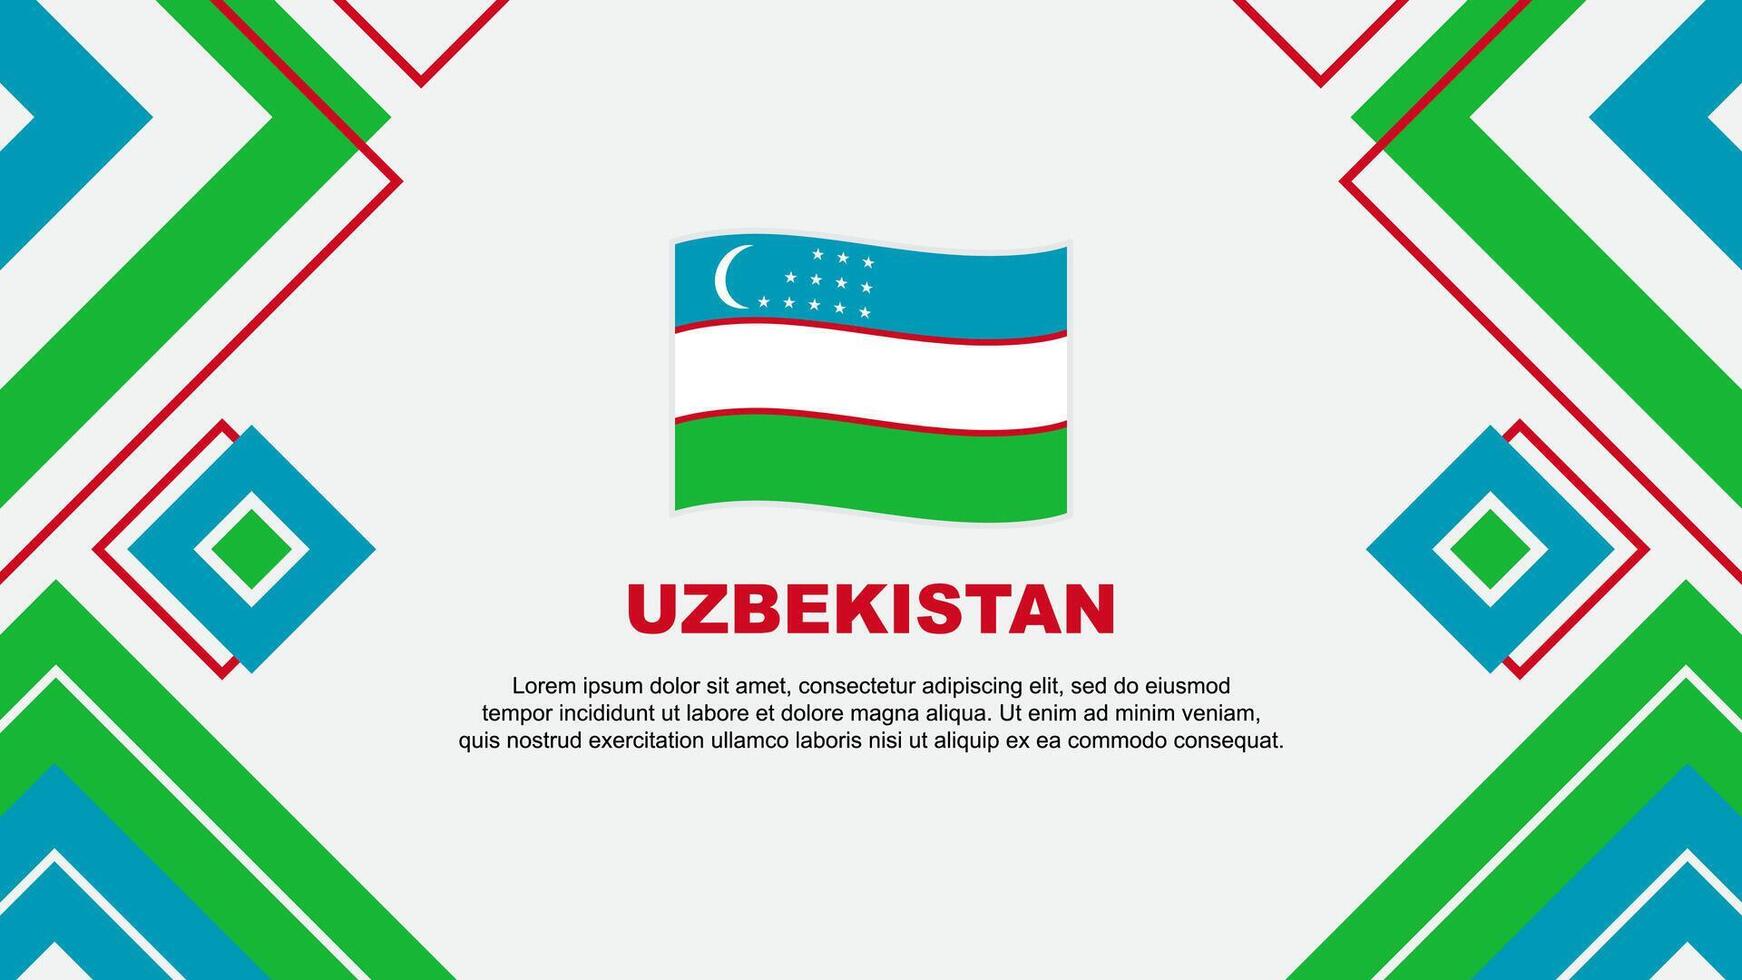 Uzbekistan Flag Abstract Background Design Template. Uzbekistan Independence Day Banner Wallpaper Vector Illustration. Uzbekistan Background